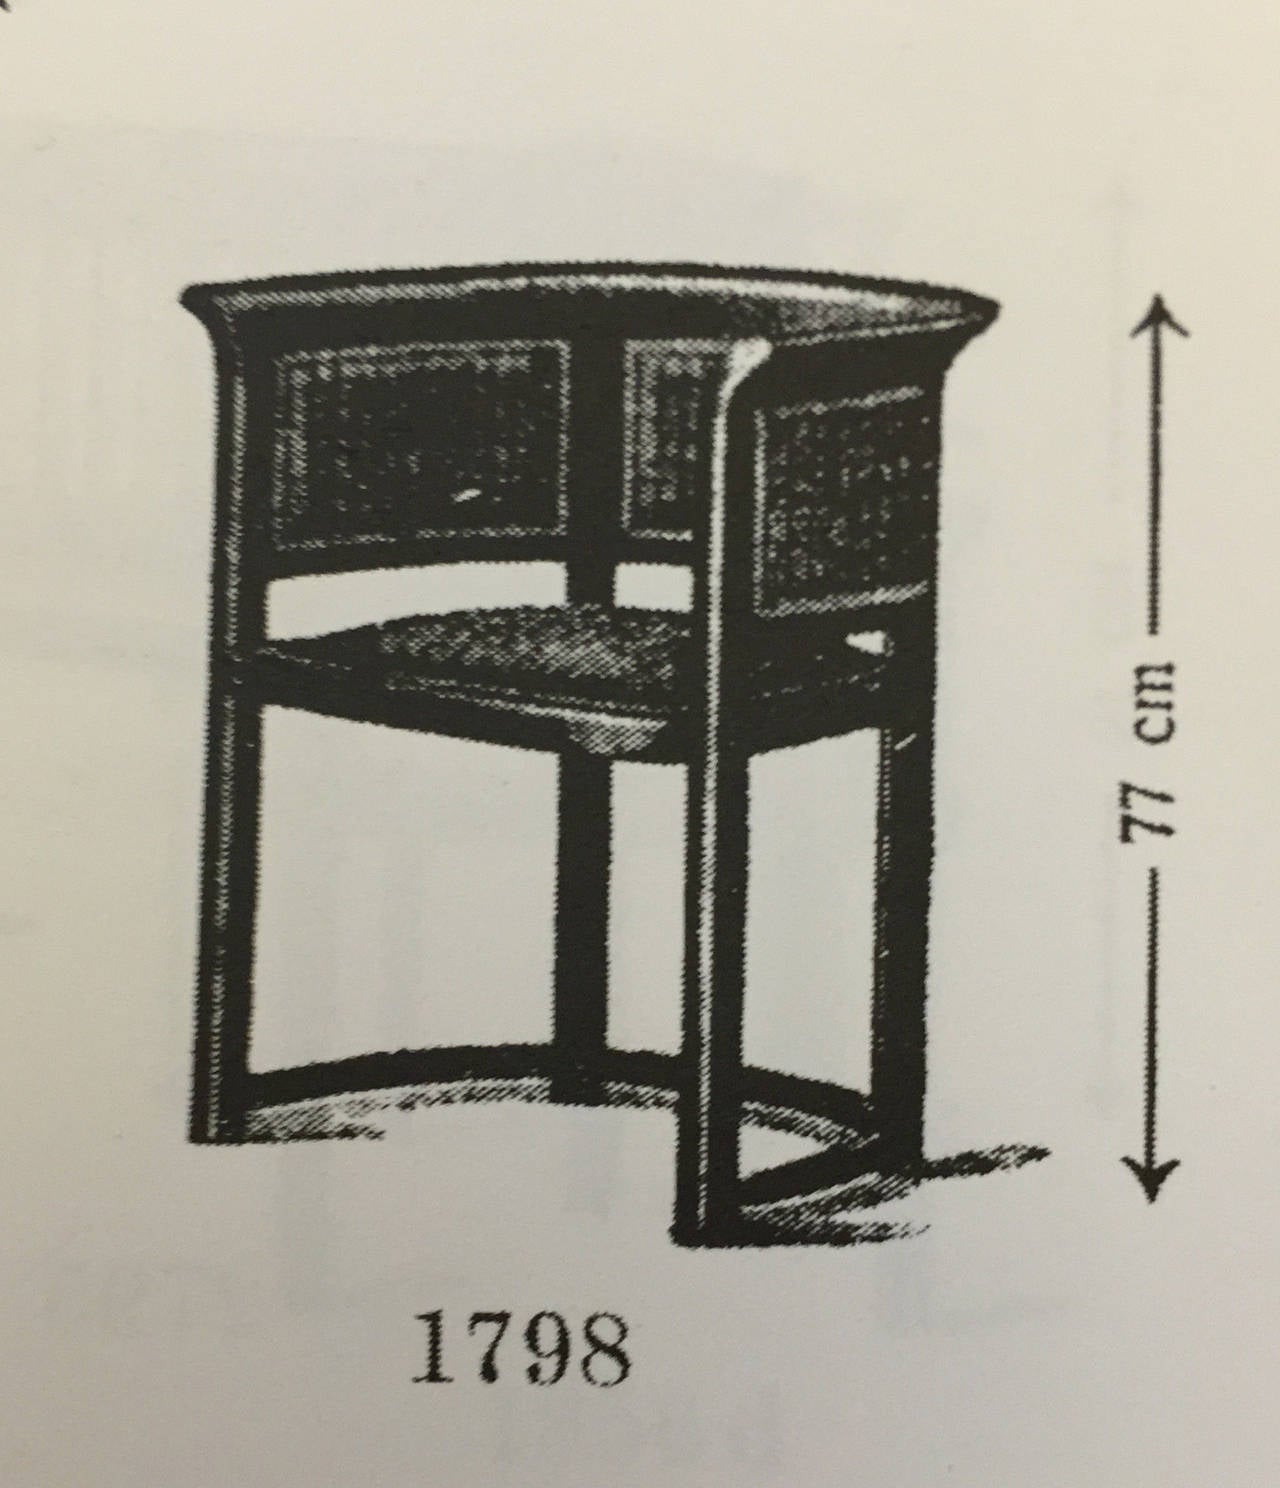 Thonet-Sessel Katalognummer 1798 (Wiener Secession) im Angebot